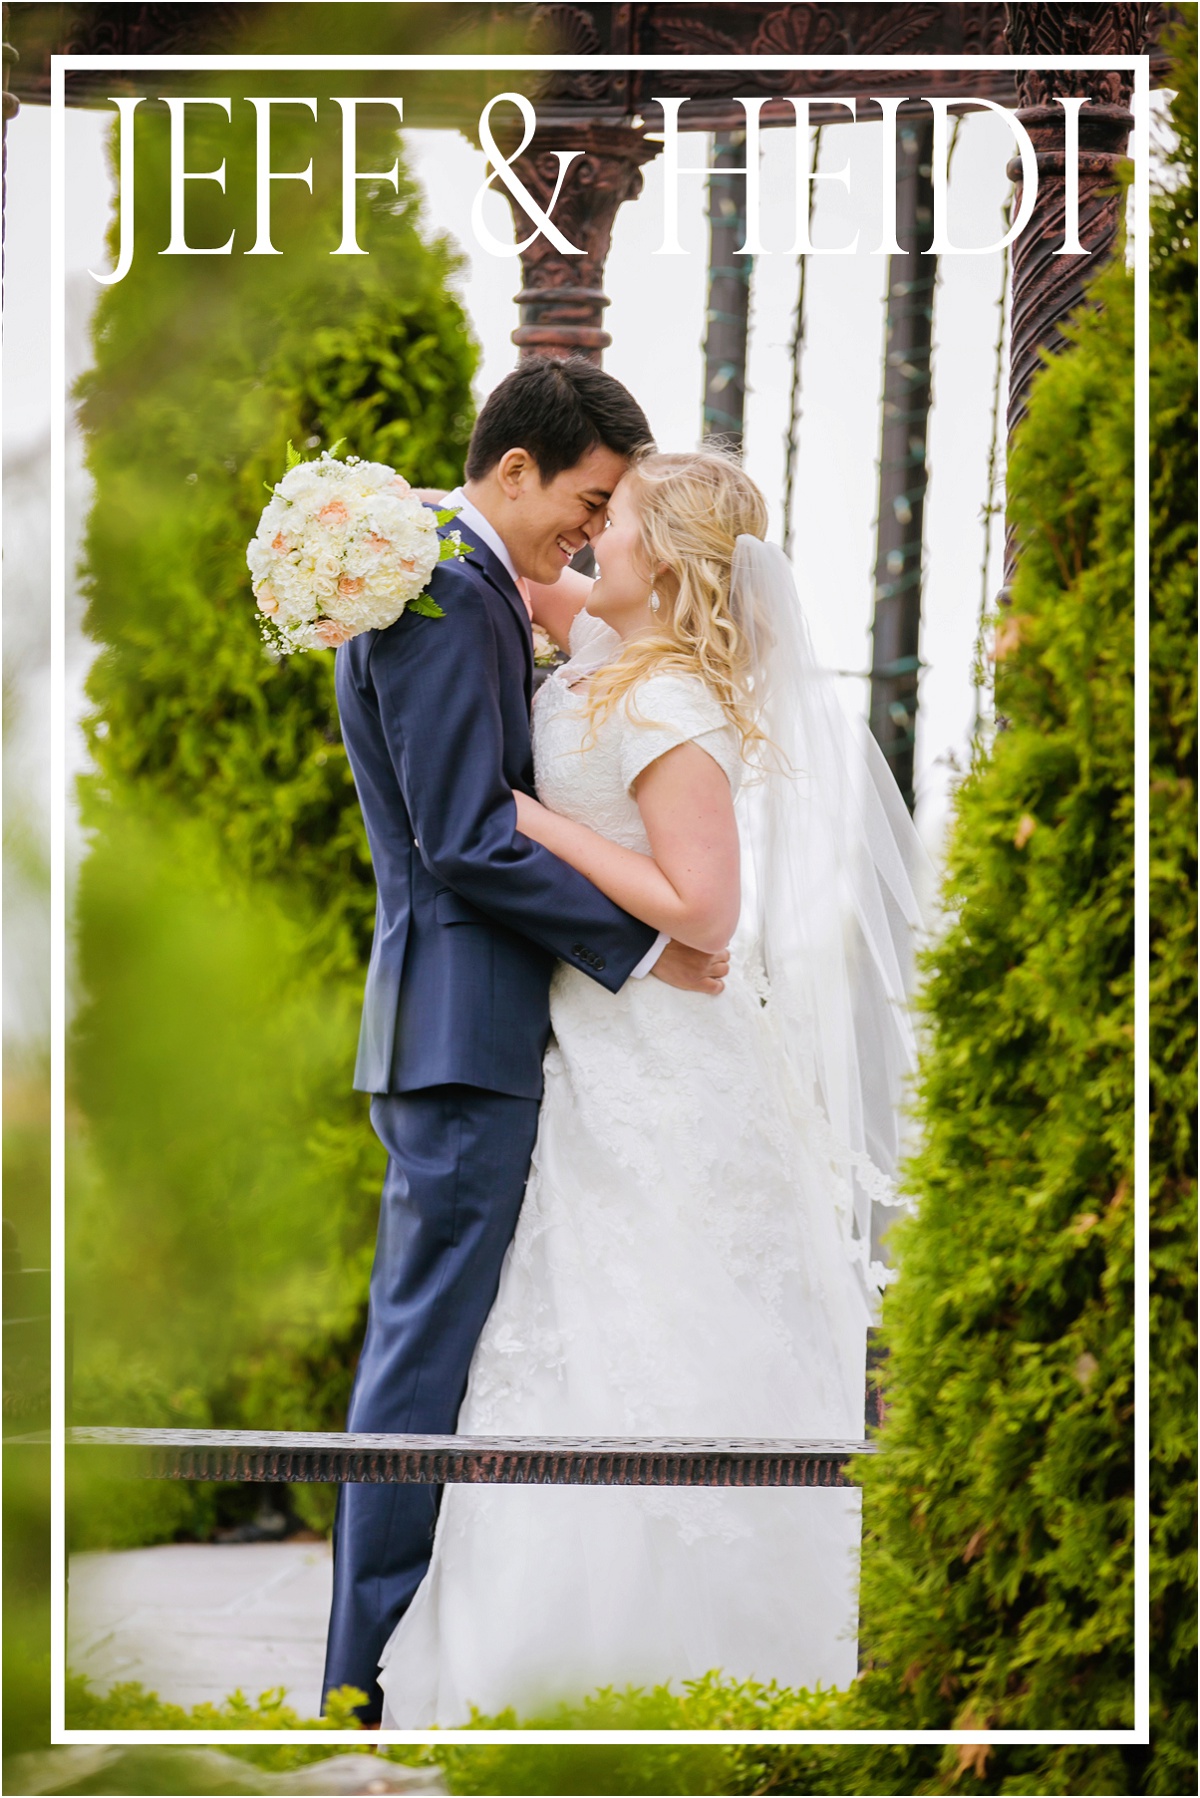 Terra Cooper Photography Weddings Brides 2015_5404.jpg